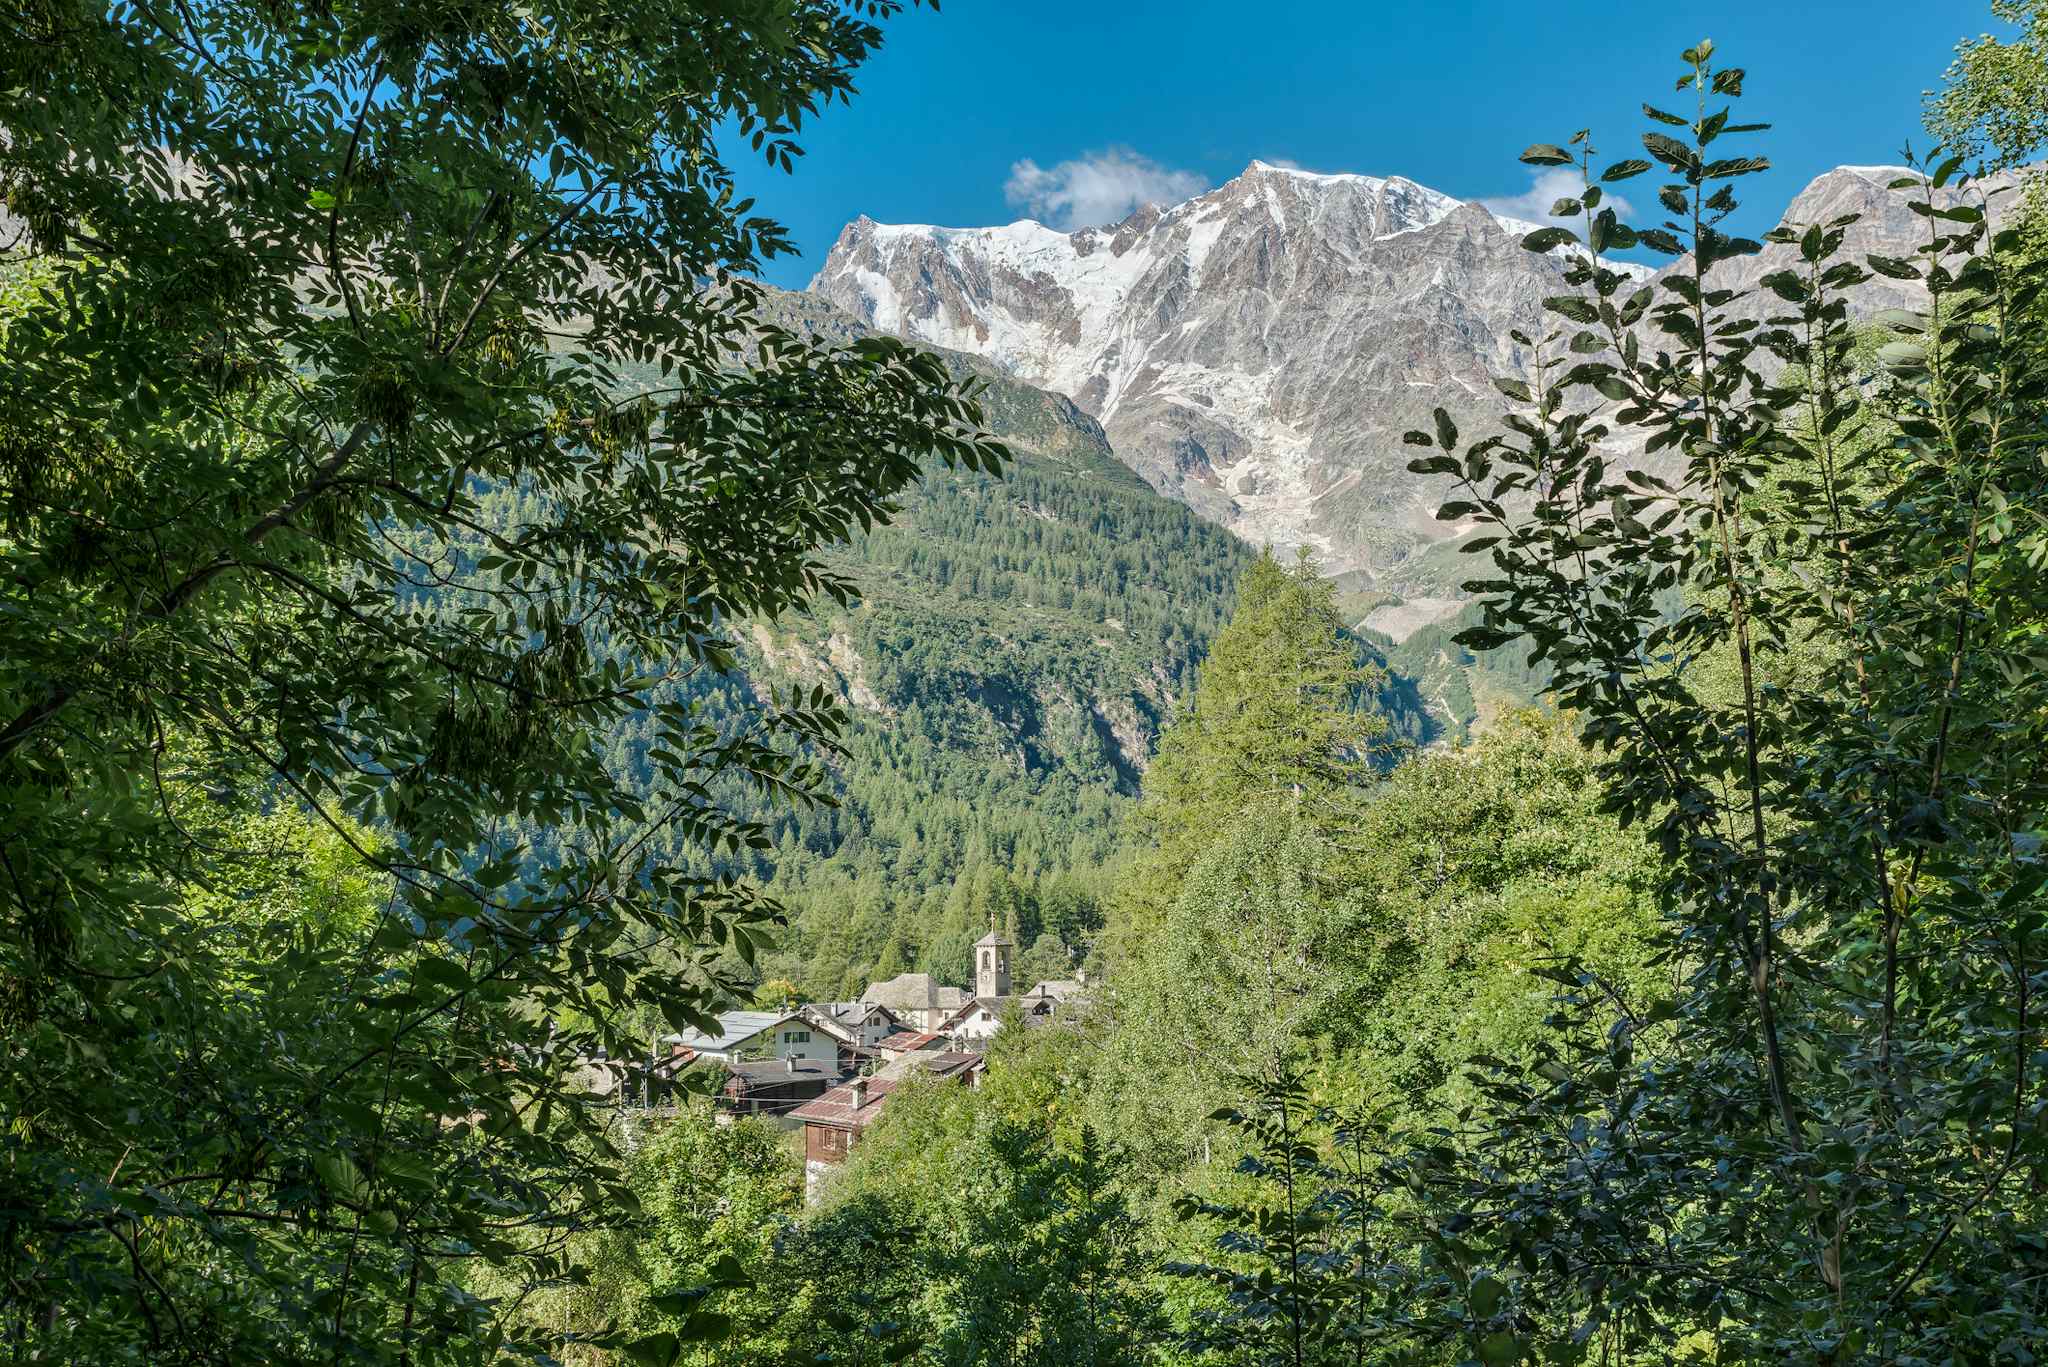 Macugnaga mountain village, Italy
Getty - 1219309226